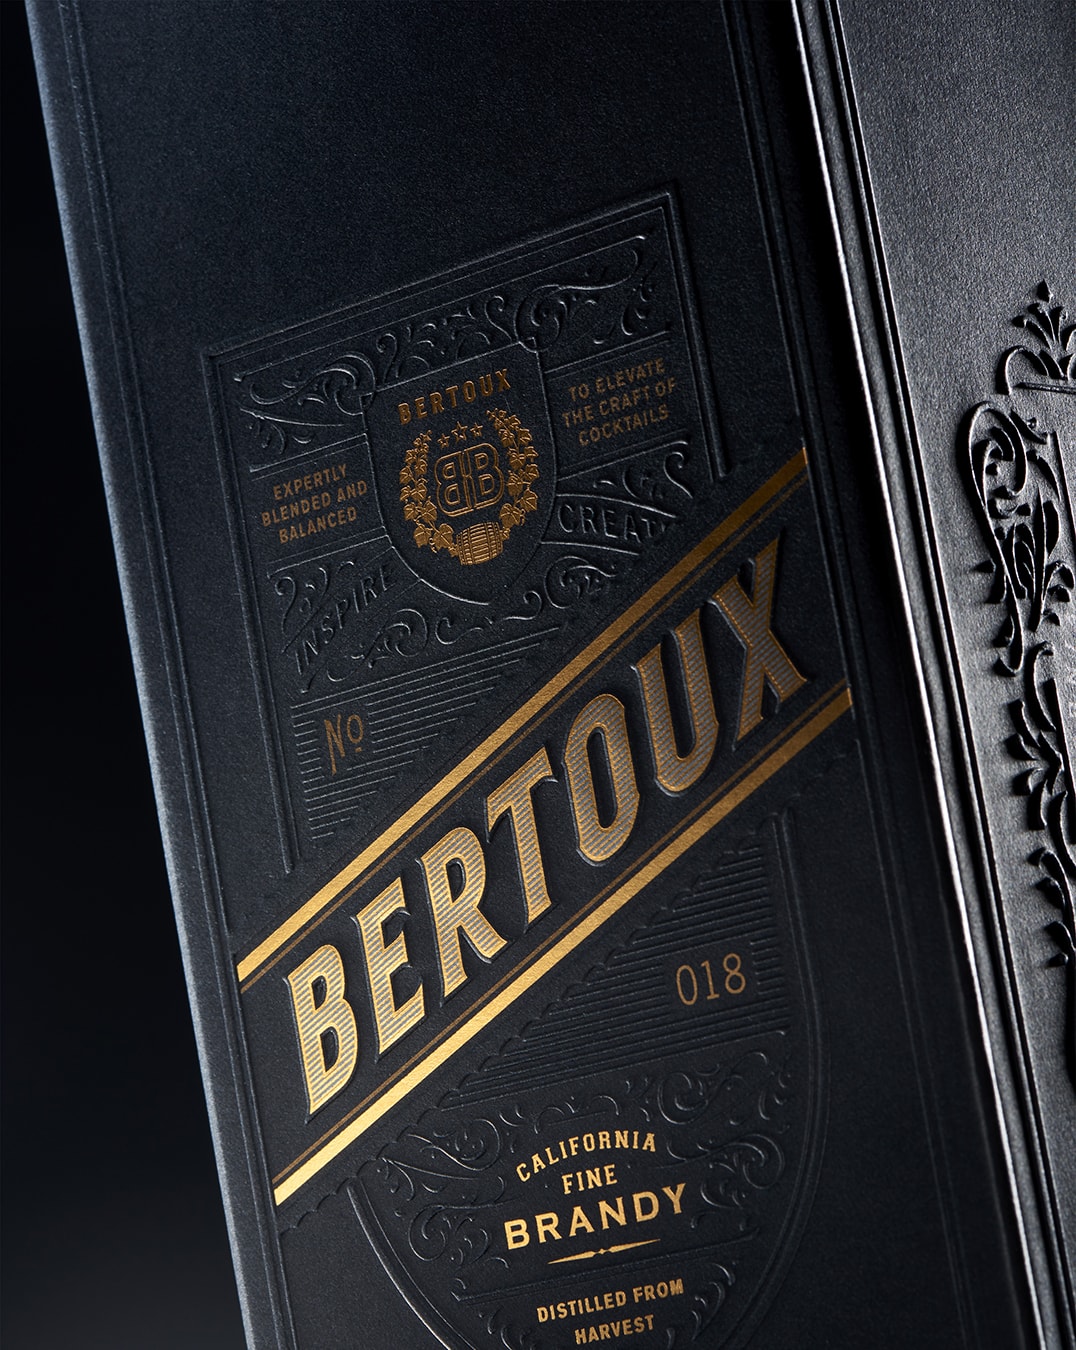 Bertoux Brandy - spirits bottle gift box detail